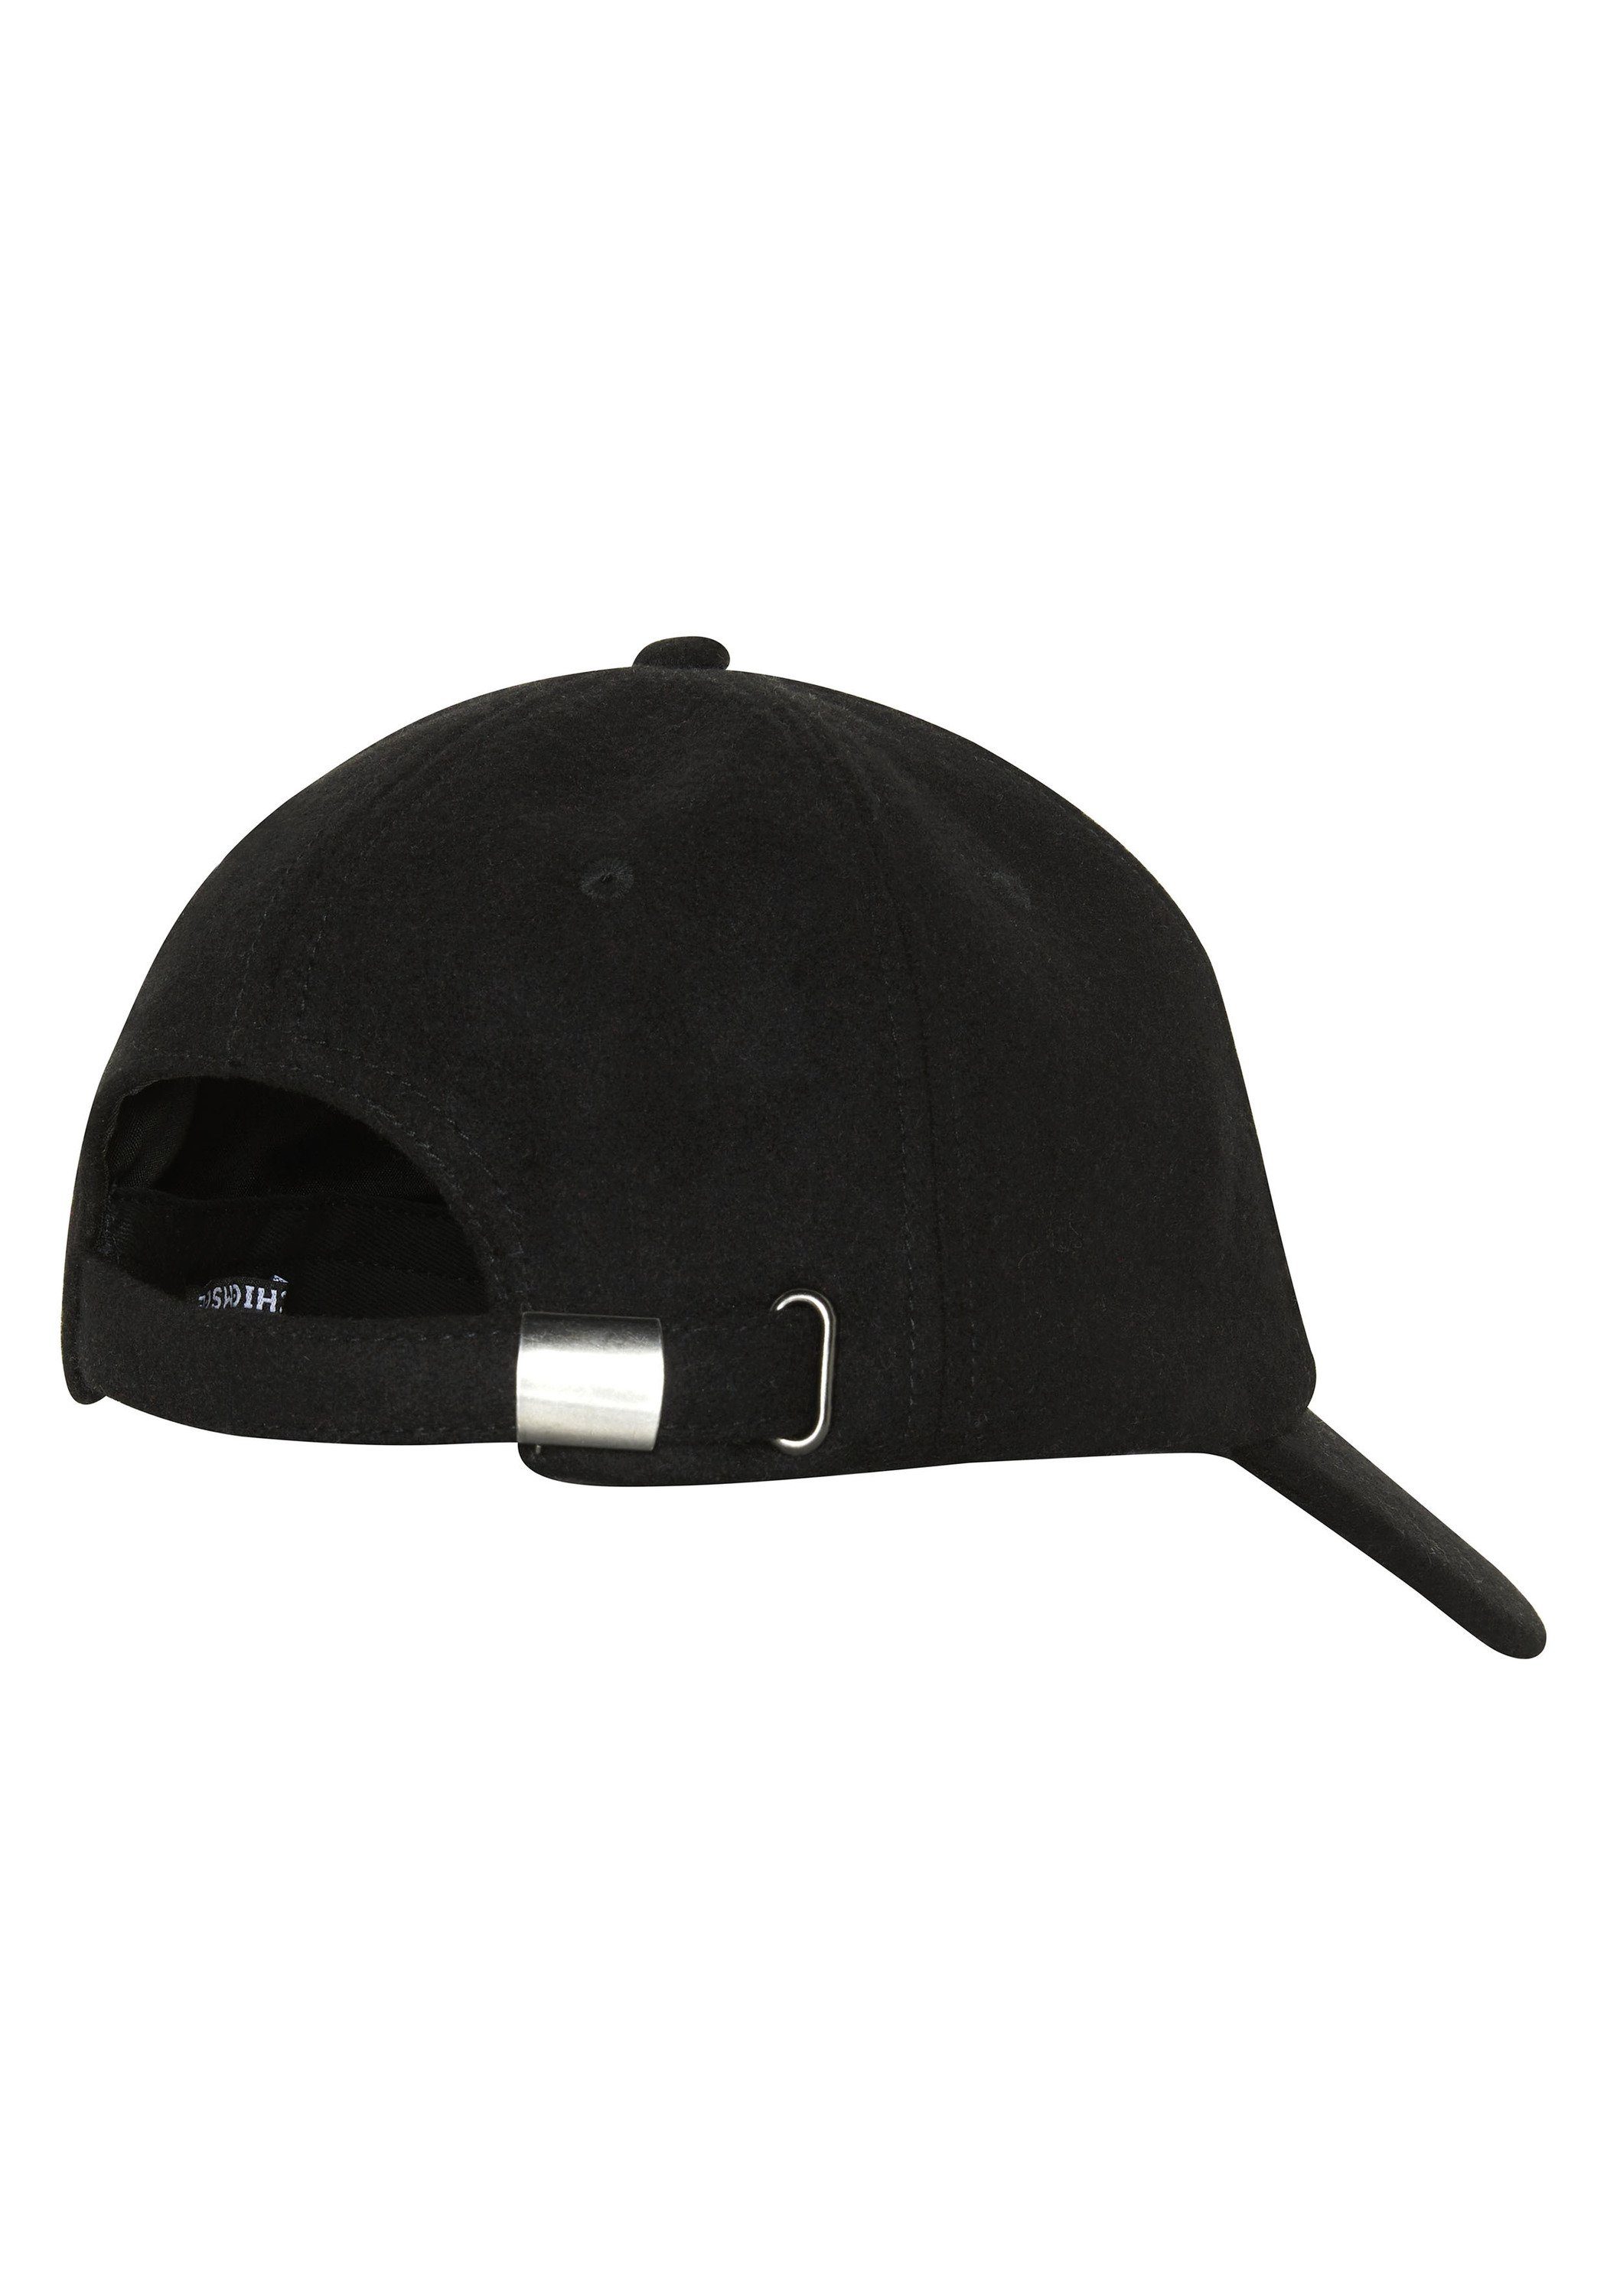 1 19-3911 Chiemsee Logo-C-Applikation Cap Snapback Basecap Beauty Black mit